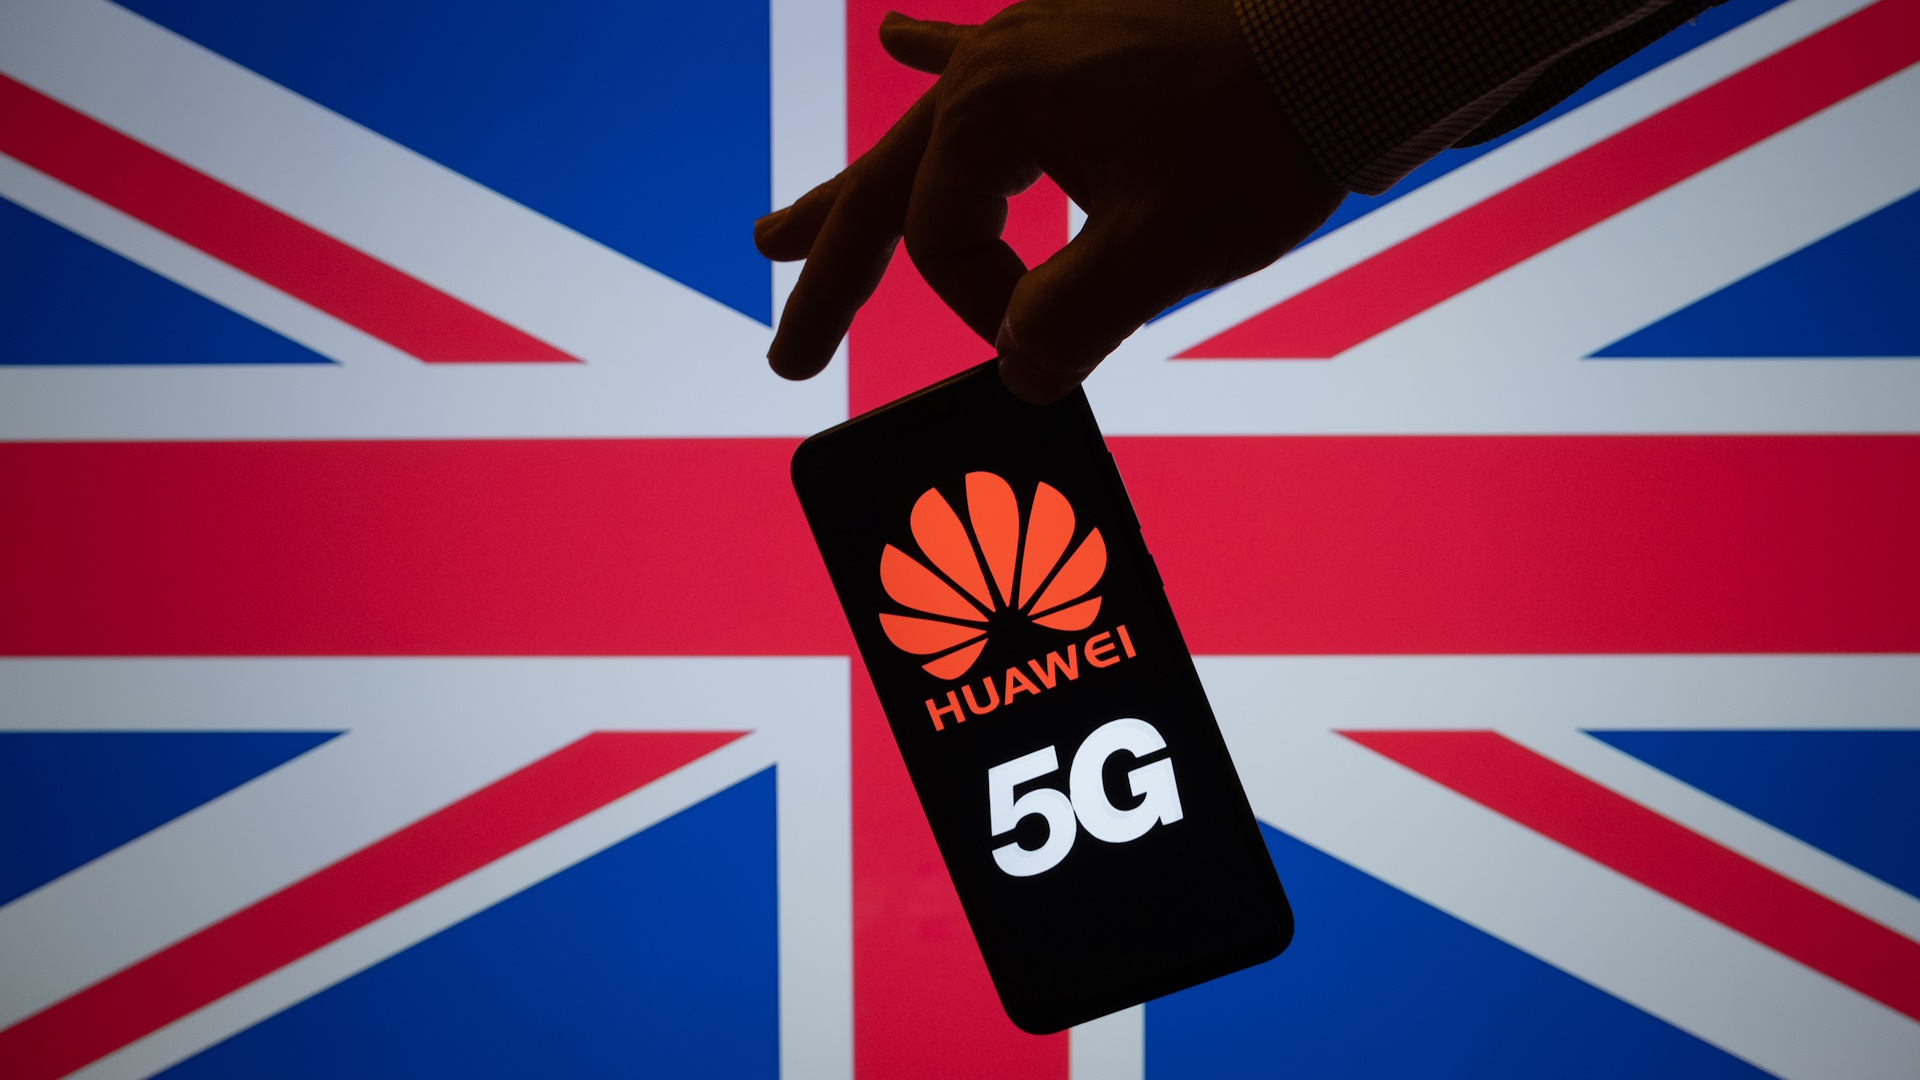 The ban on Huawei equipment cost British Telecom half a billion pounds